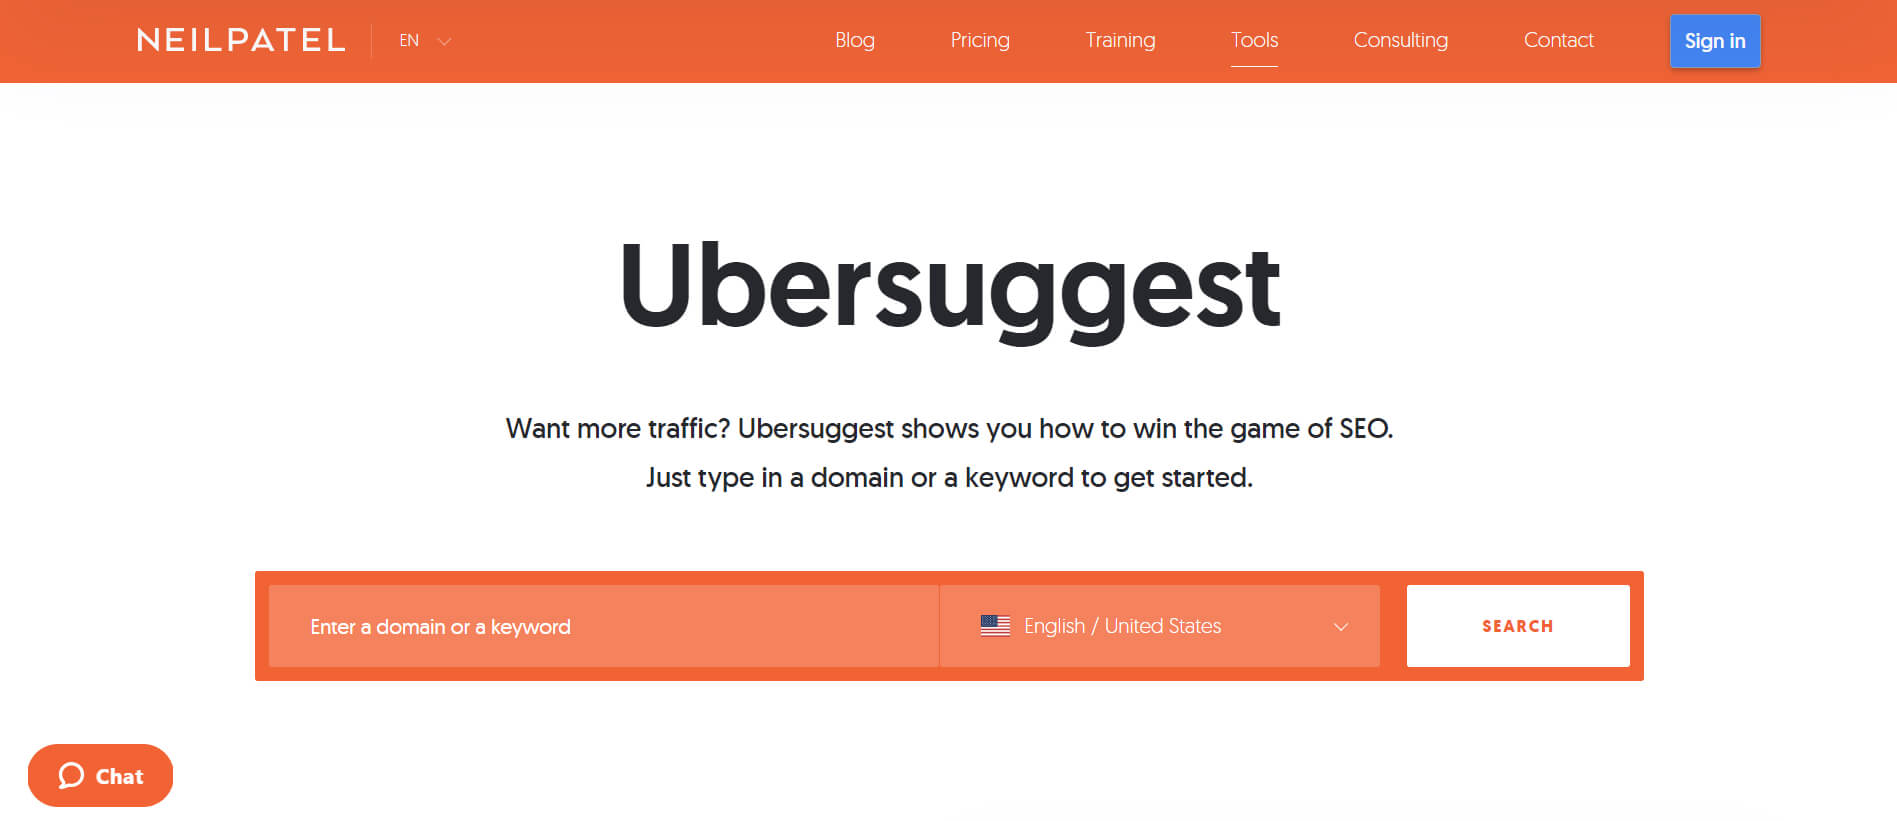 Ubersuggest - Online Marketing Tool by Neil Patel screenshot